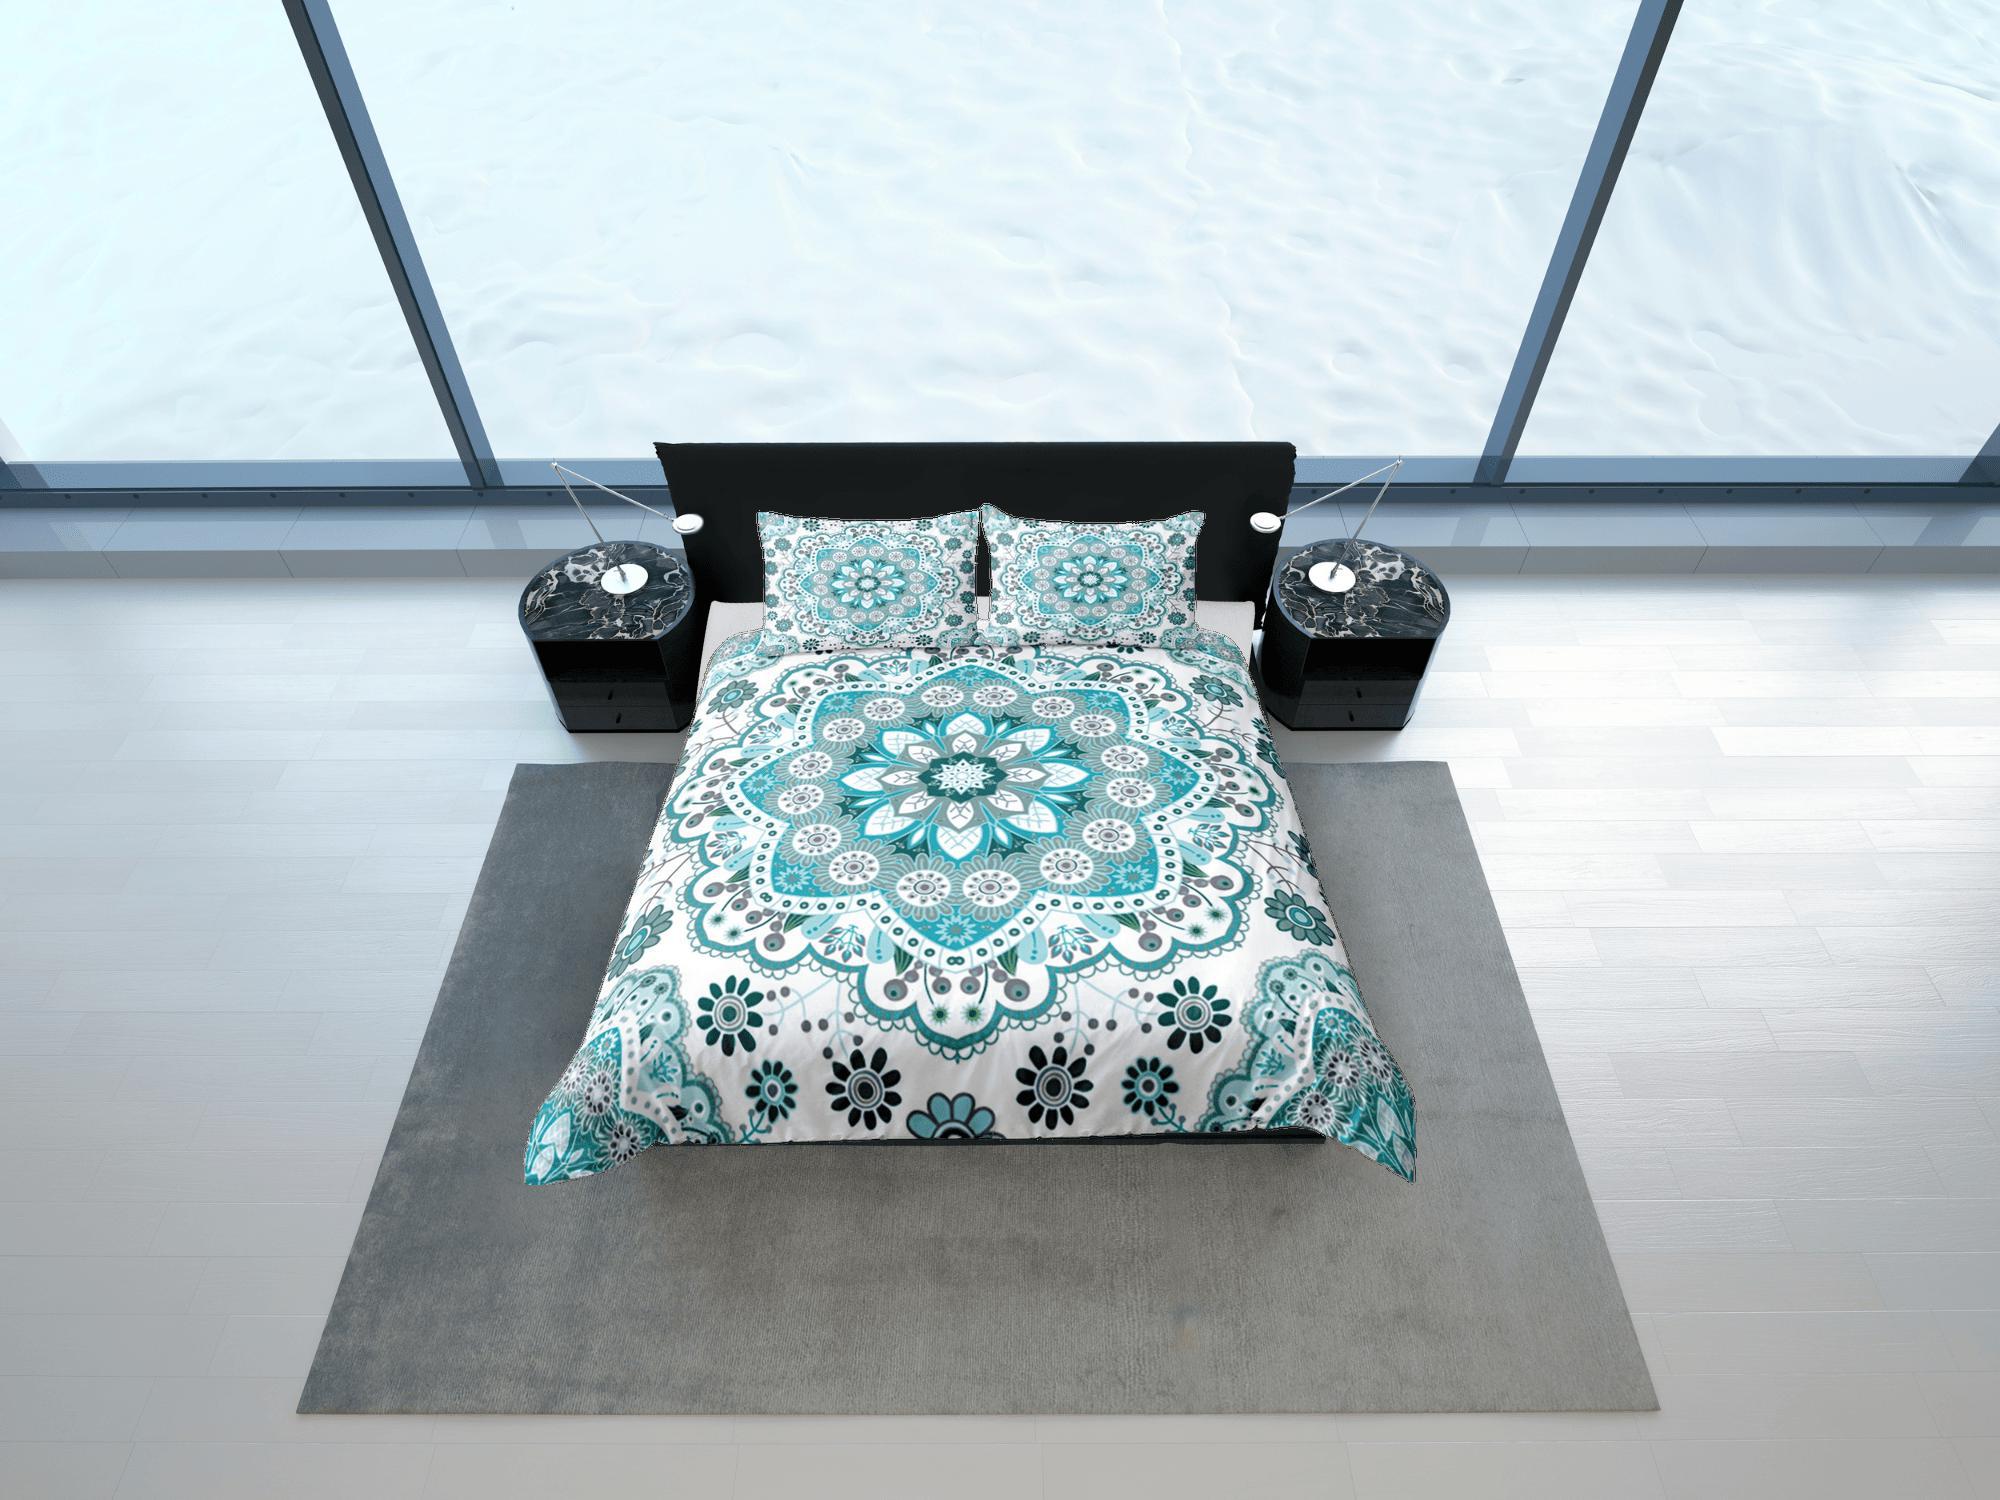 daintyduvet Mandala Bohemian Duvet Cover Set Colorful Bedspread, Dorm Bedding with Pillowcase